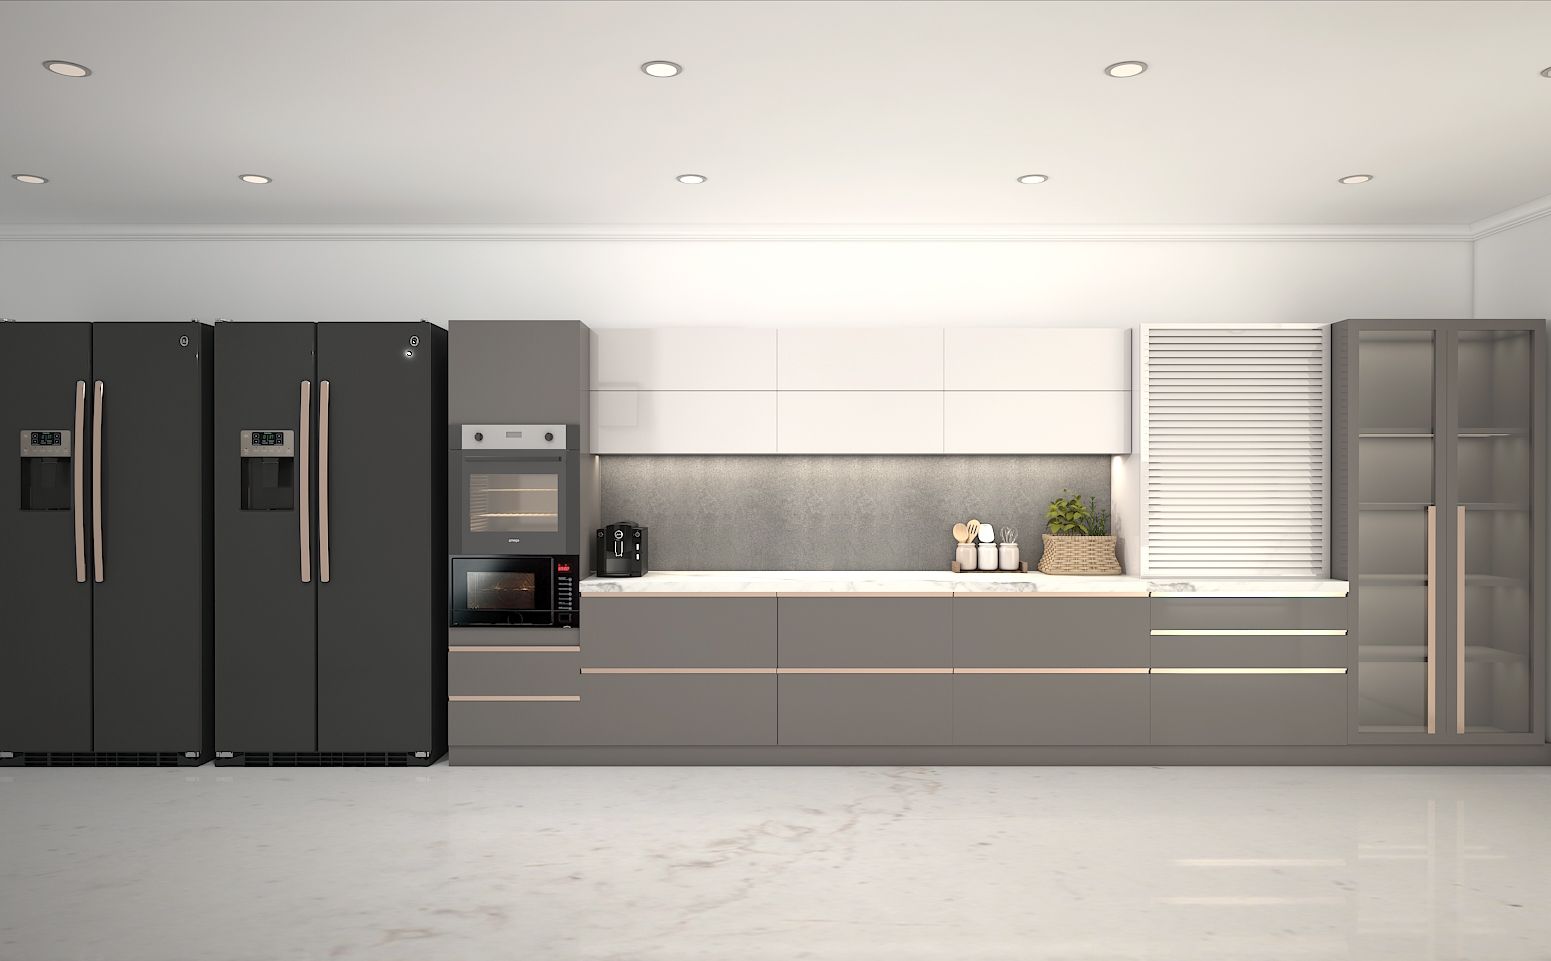 white modular kitchen design in a straight kitchen layout with grey cabinets